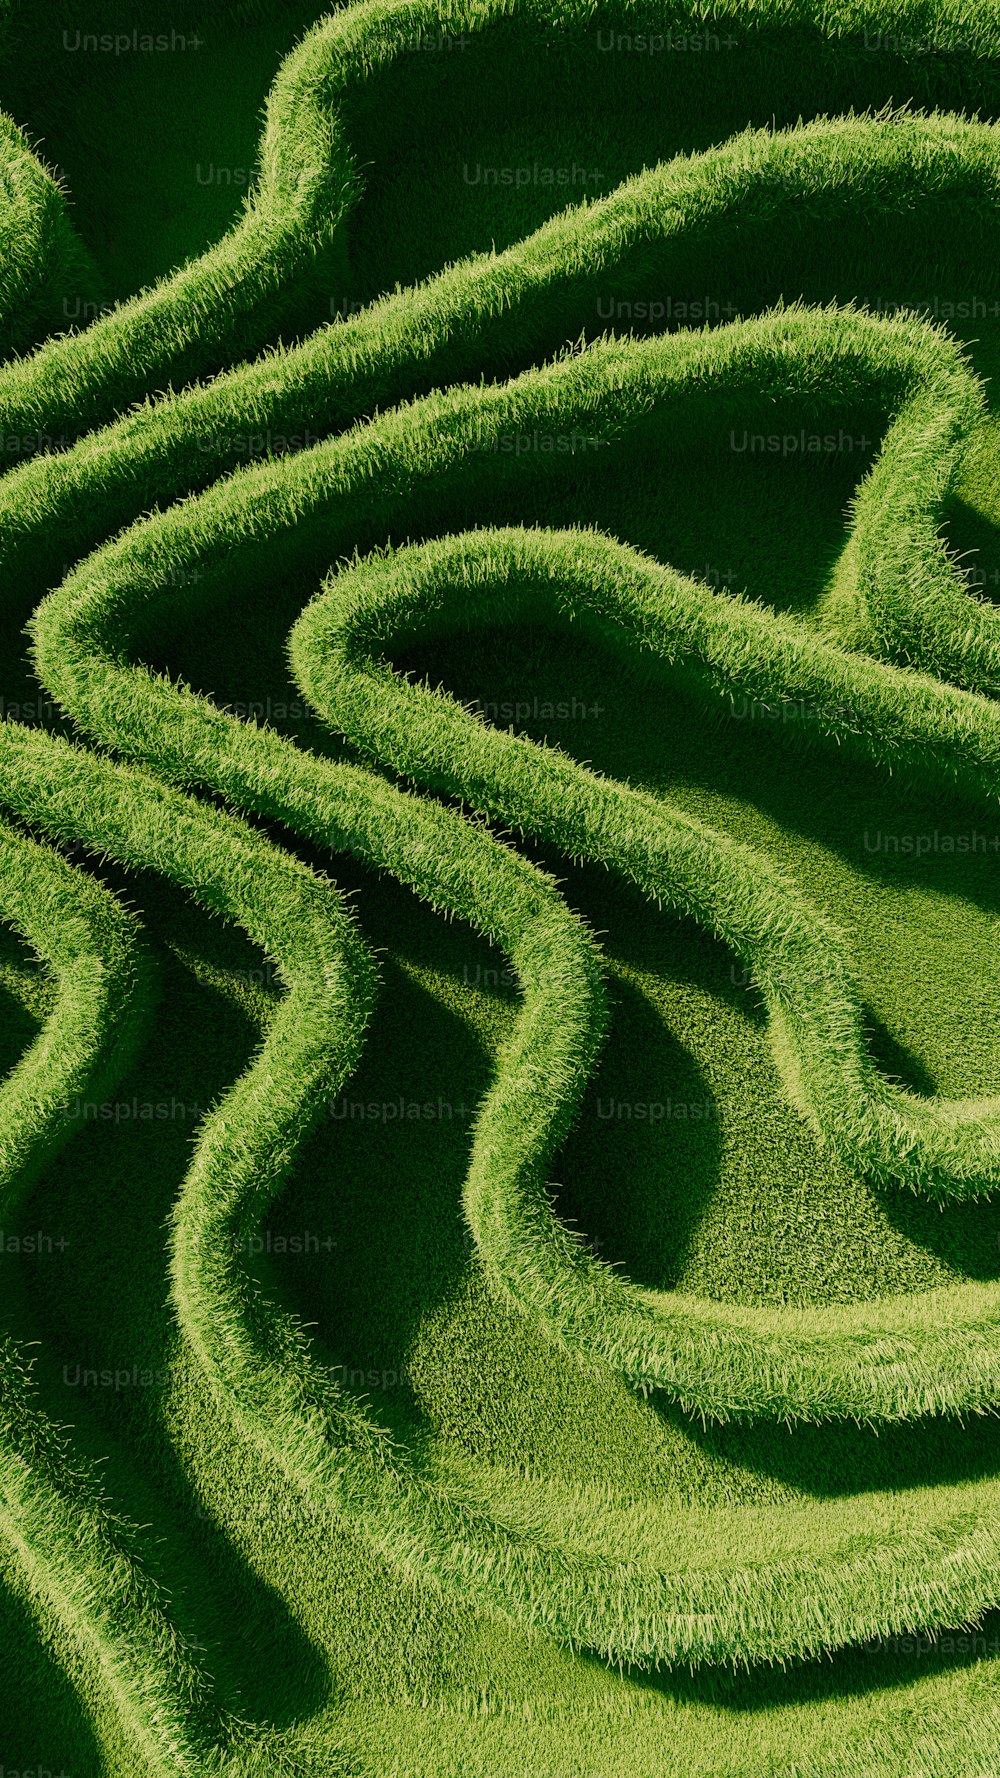 Un gros plan d’un design d’herbe verte